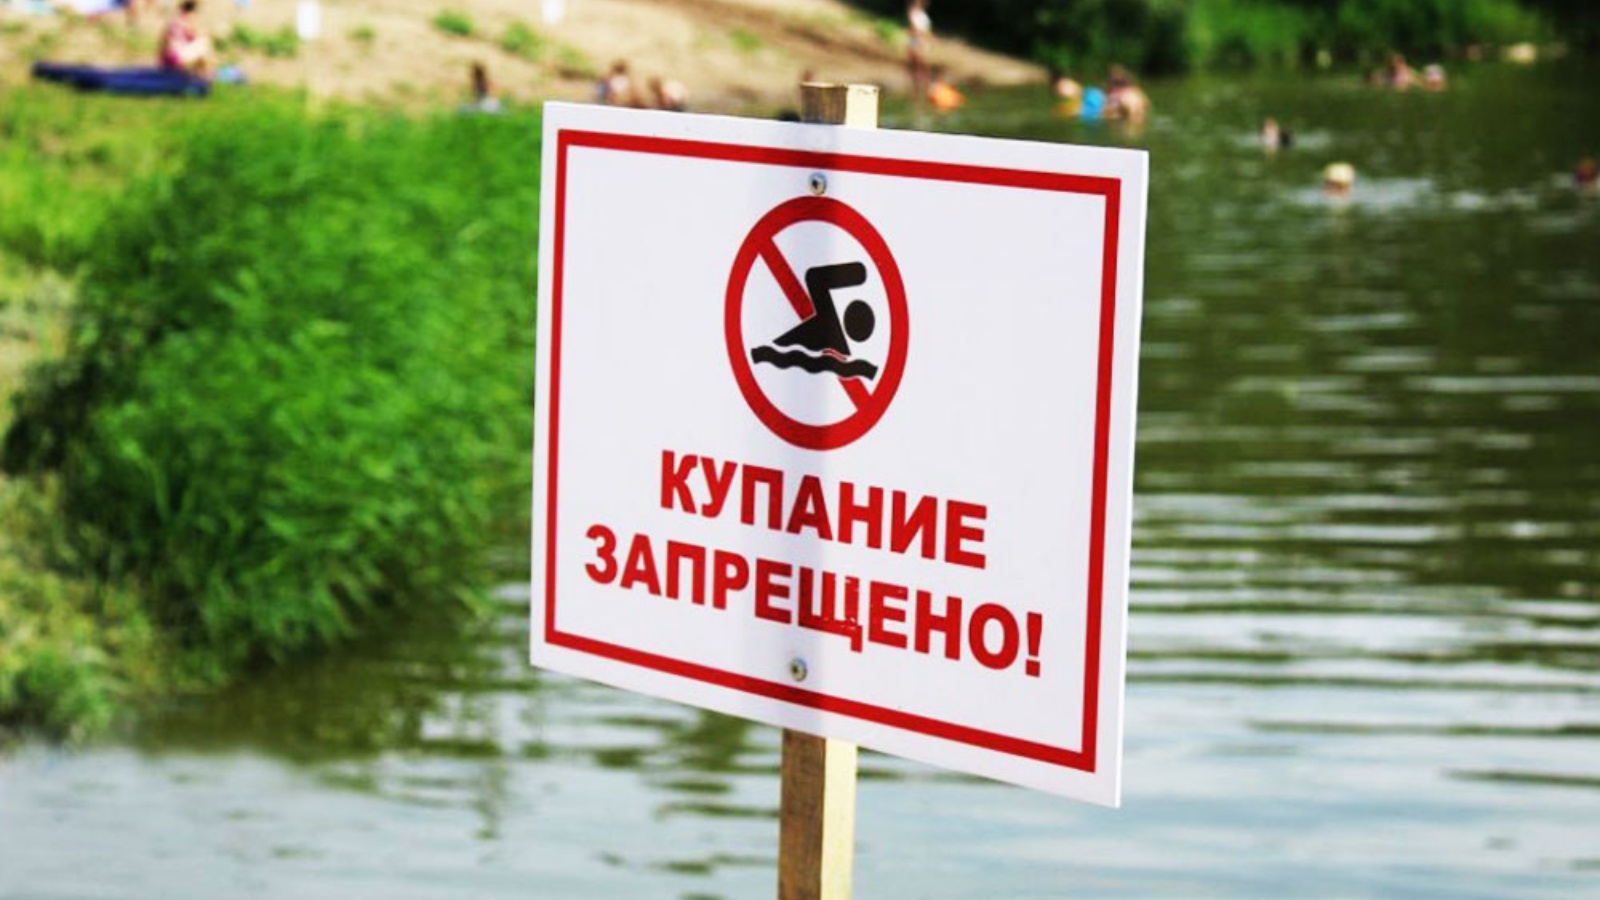 На территории области запрещено. Купание запрещено. Купание запрещено табличка. Таблички о запрете купания. Купание в водоемах запрещено.